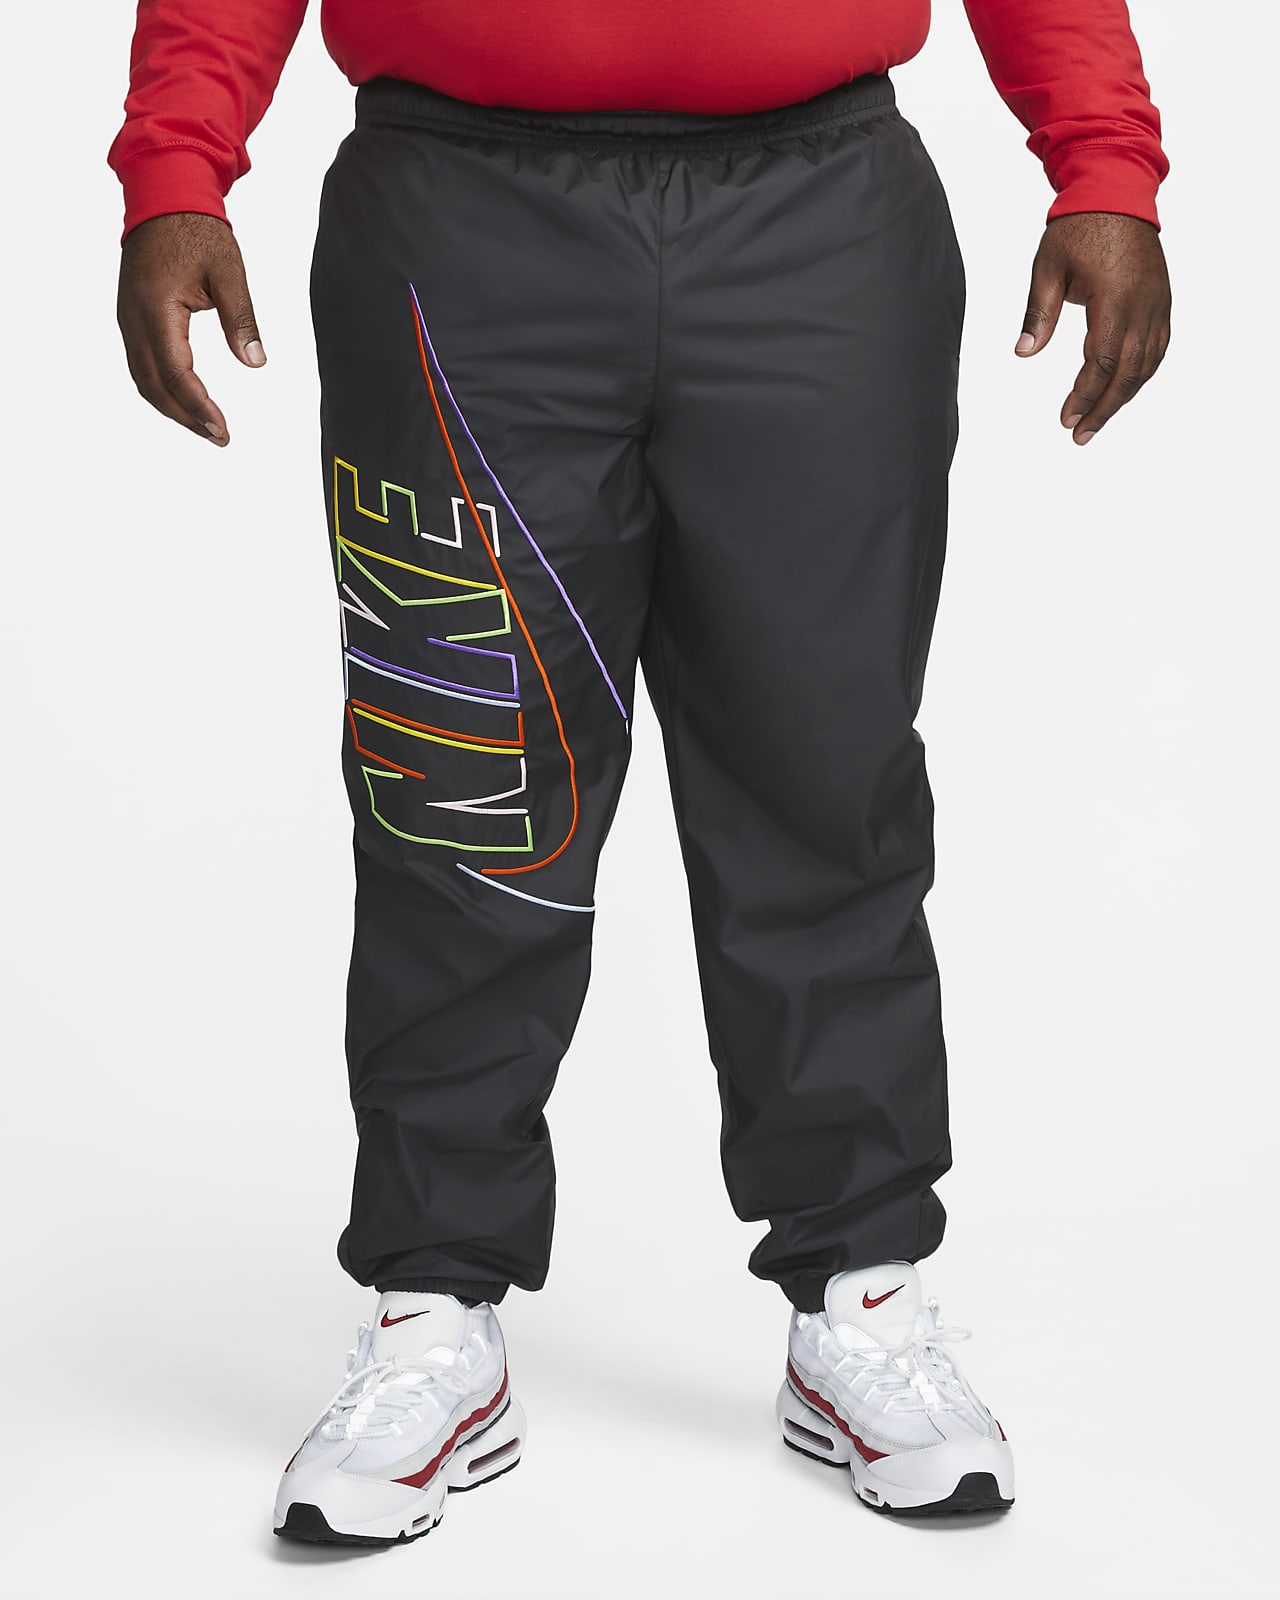 Nike Men's Run Stripe Woven Pant, Black/Reflective Silver, Medium :  : Clothing, Shoes & Accessories